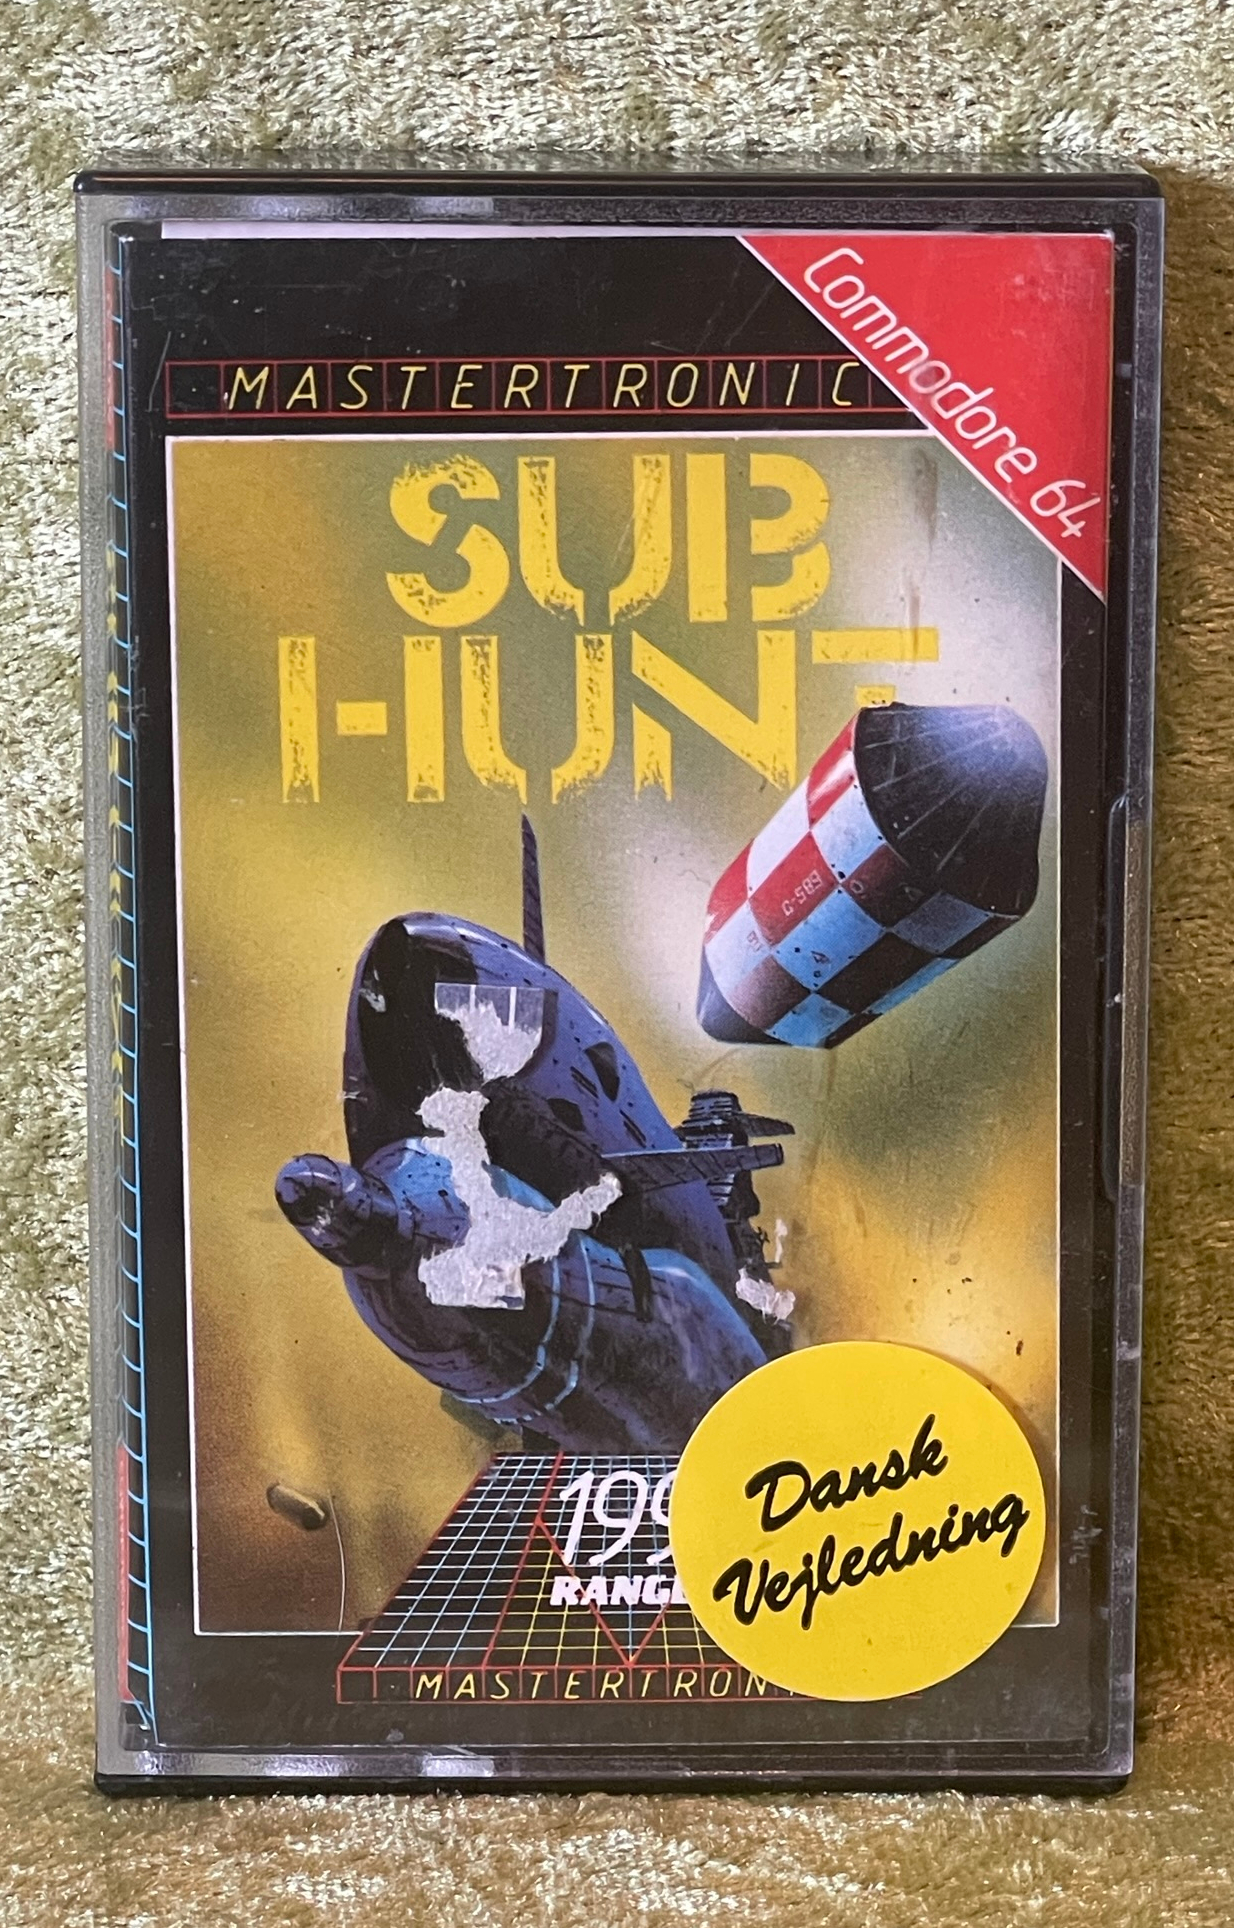 Sub Hunt